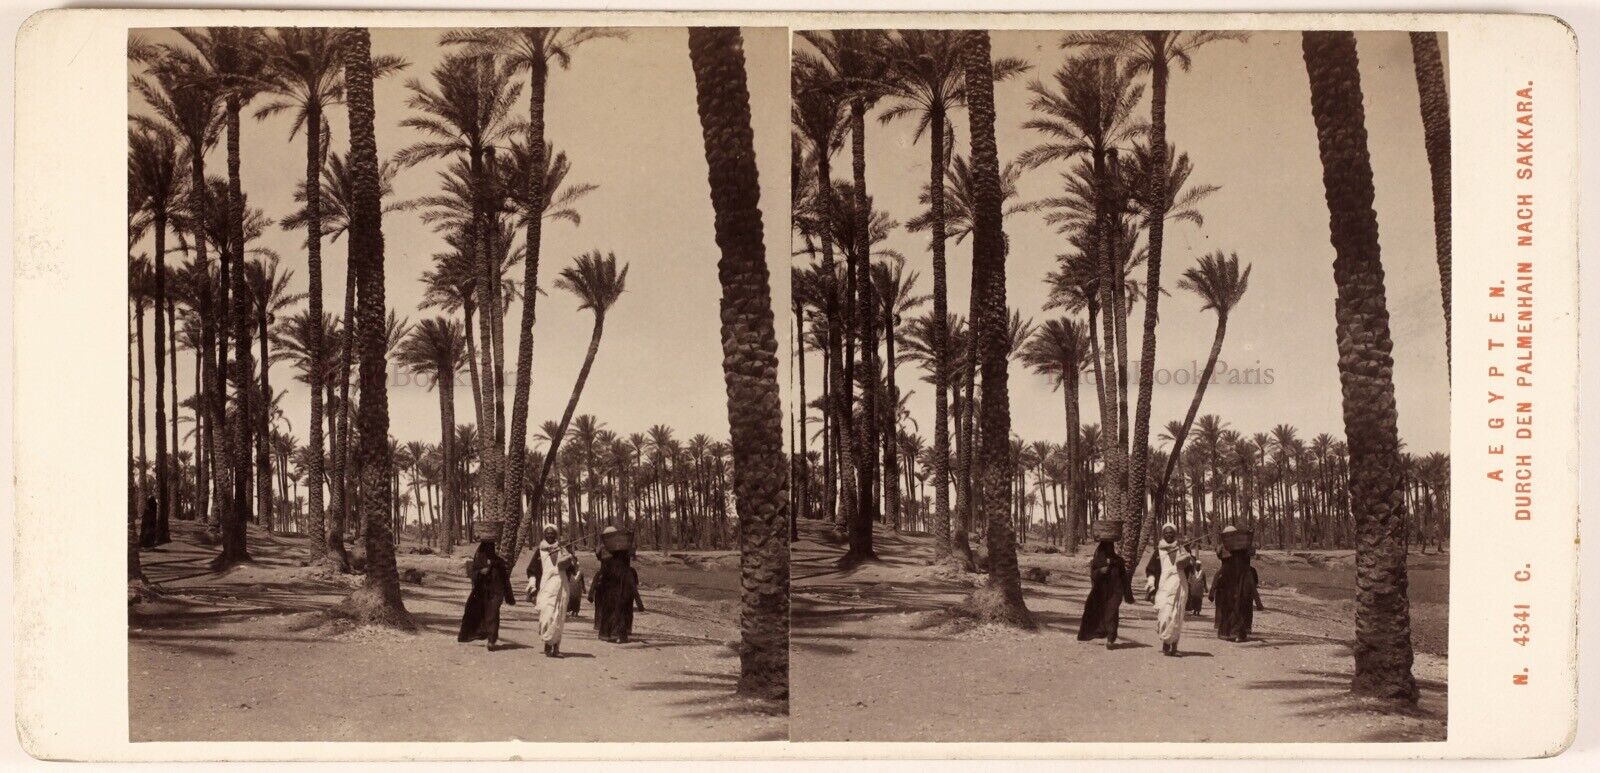 Egypt Palm Grove Saqqara Photo Alois Beer Stereo Vintage Albumin c1880